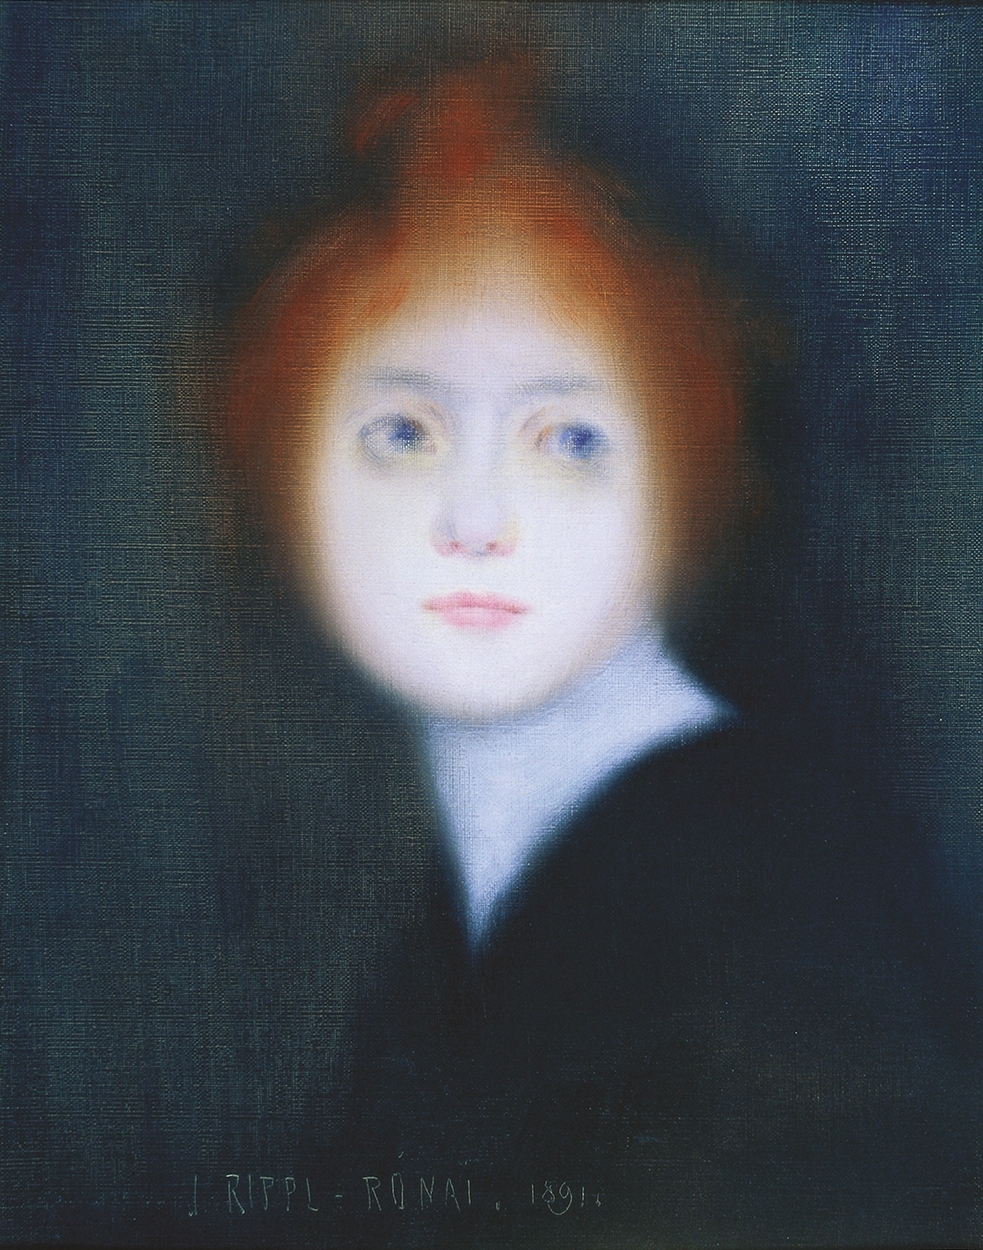 Rippl-Rónai József (1861-1927) Vöröskontyos női fej, 1891